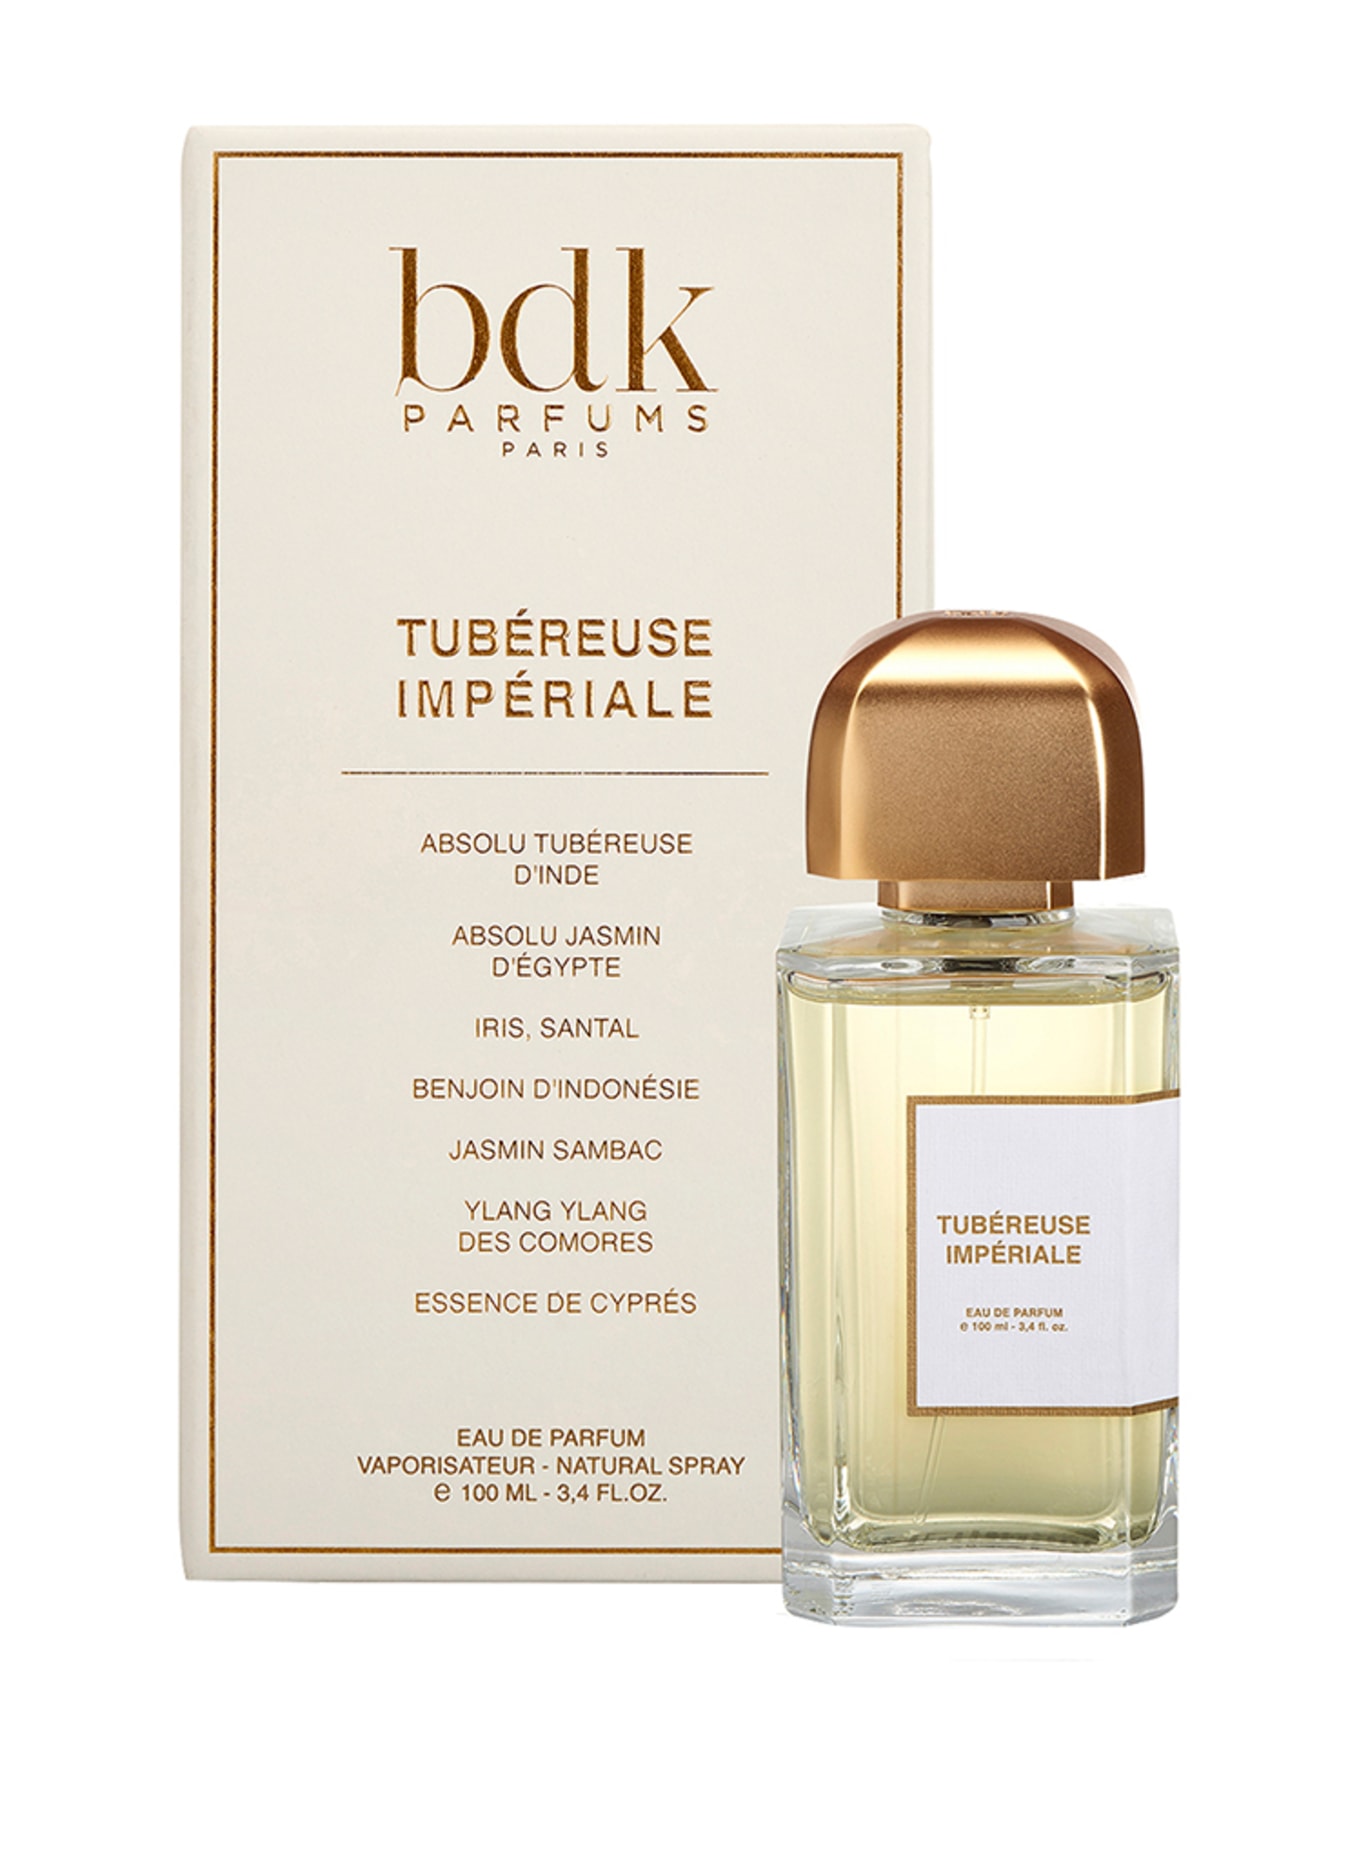 bdk Parfums TUBEREUSE IMPERIALE (Obrazek 2)